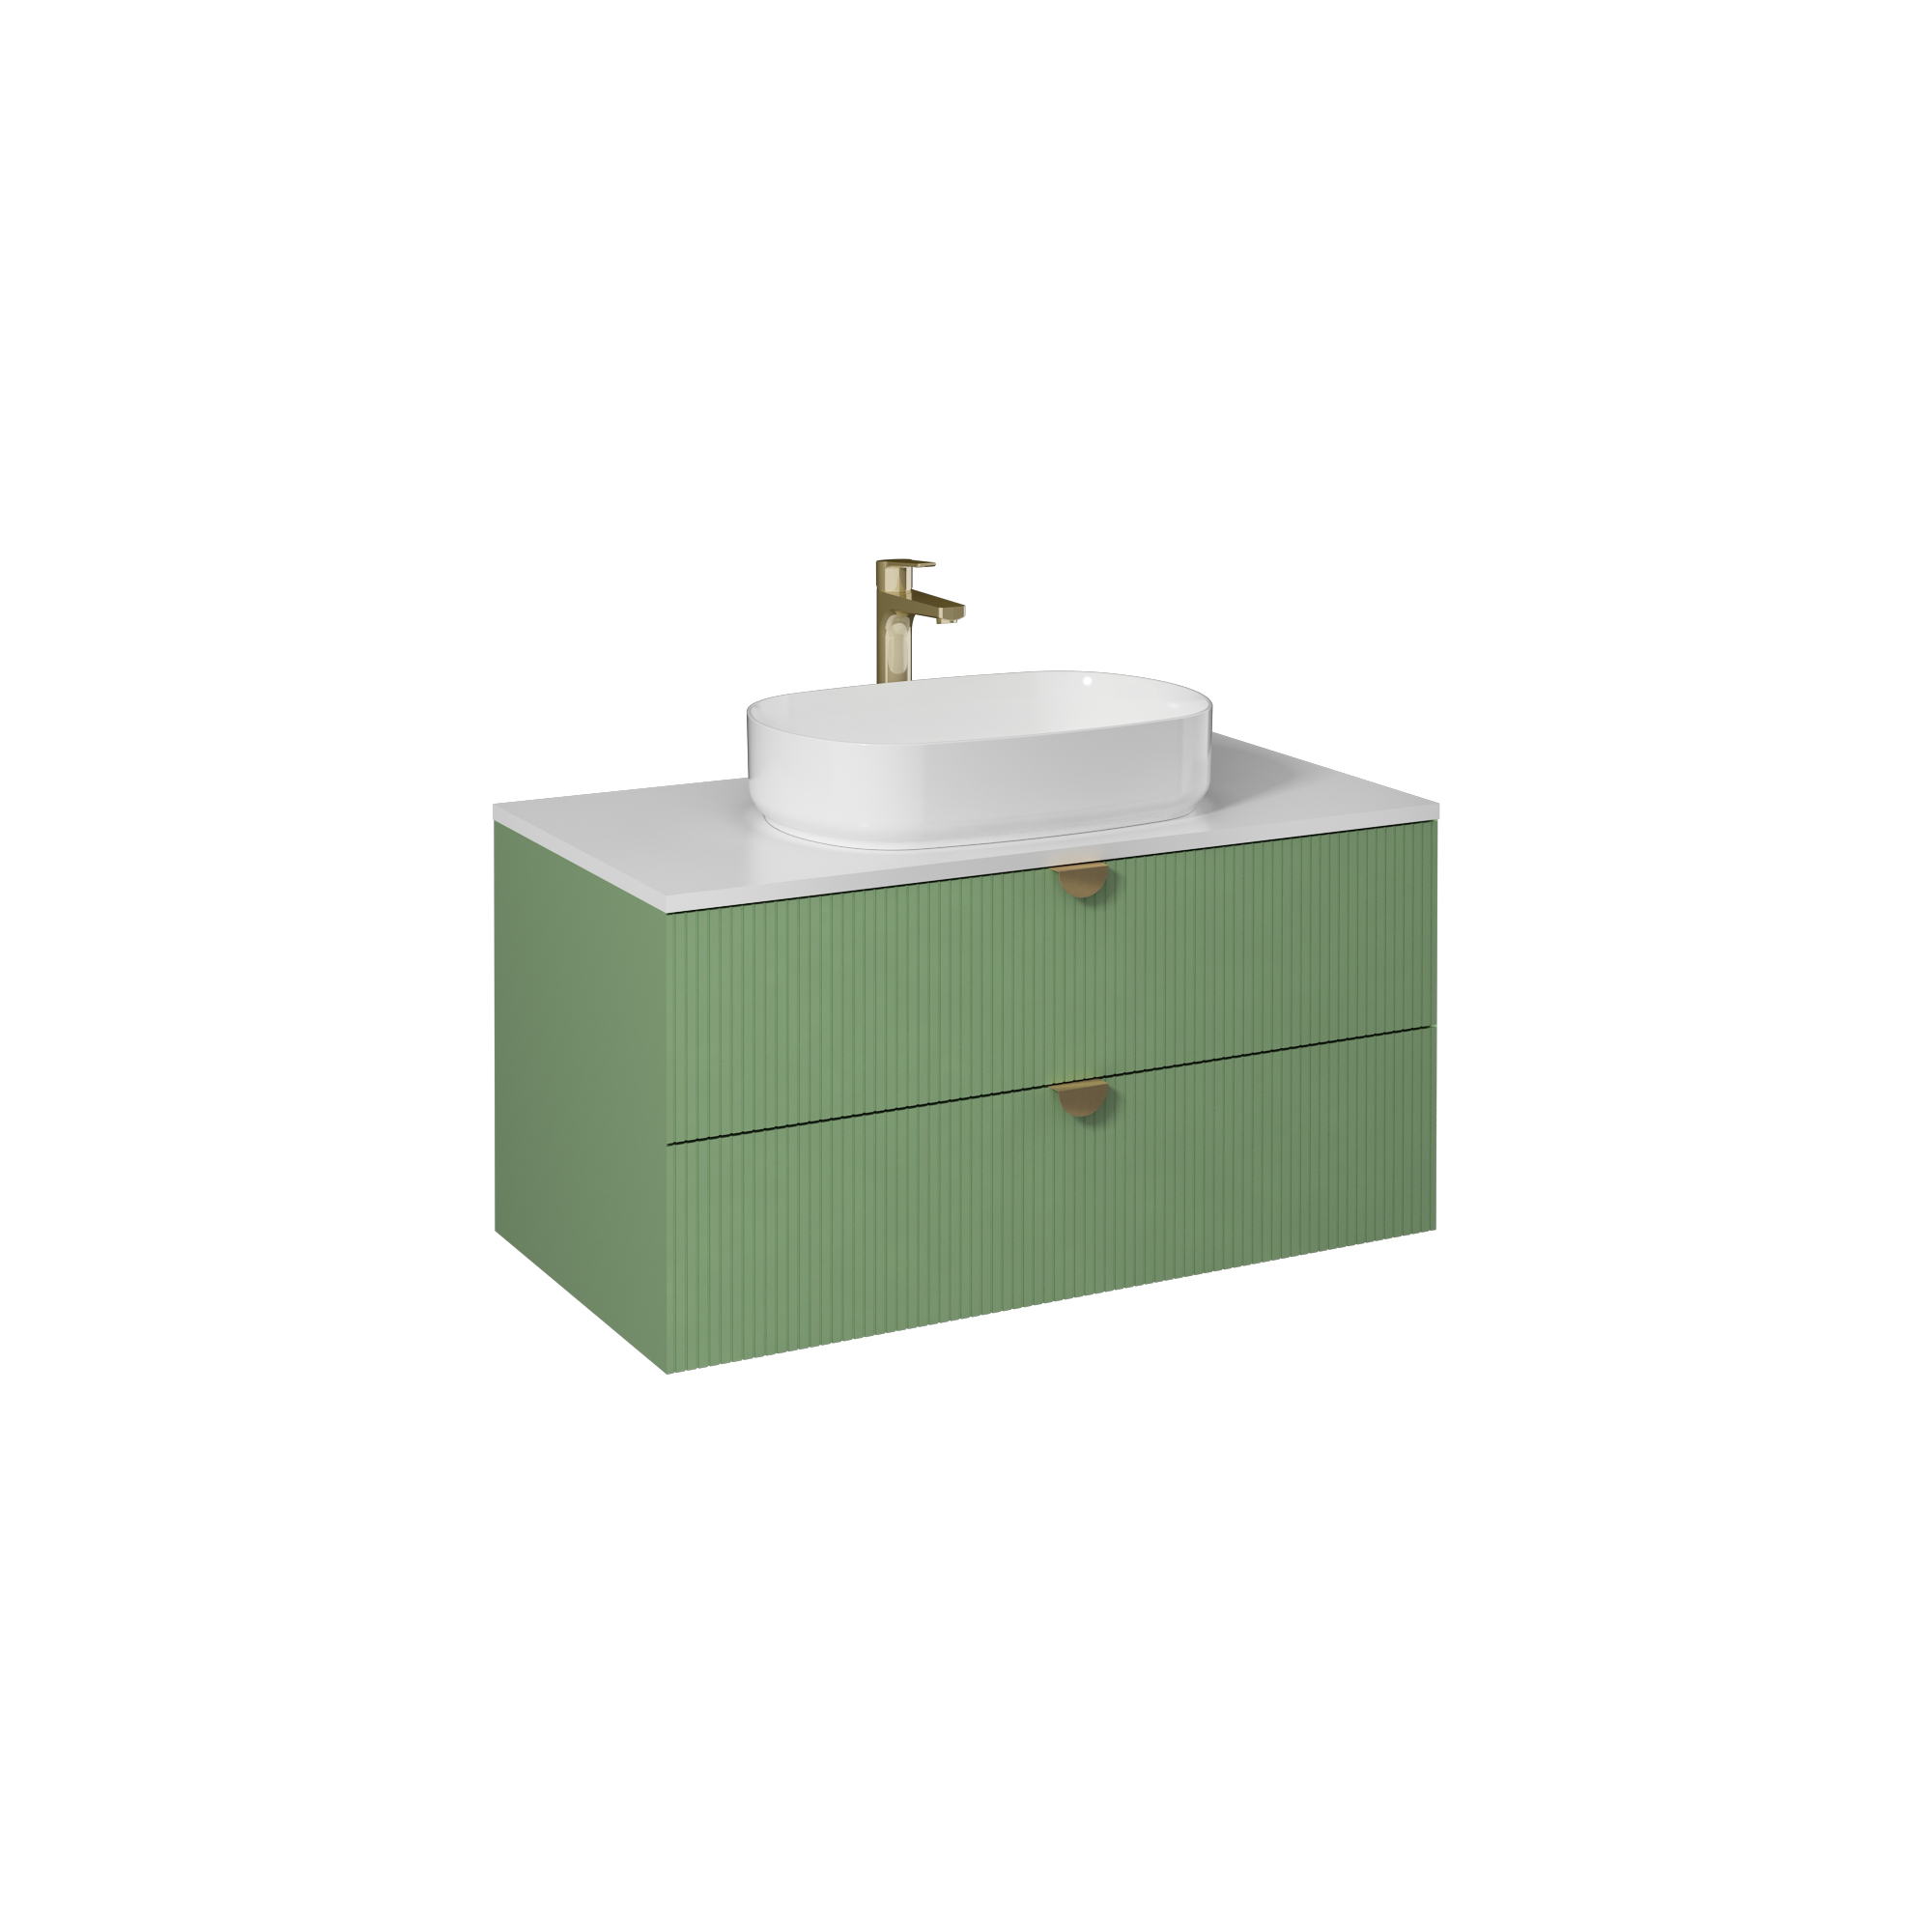 Infinity Washbasin Cabinet Ocean,  with Petrol Green Washbasi 130 cm